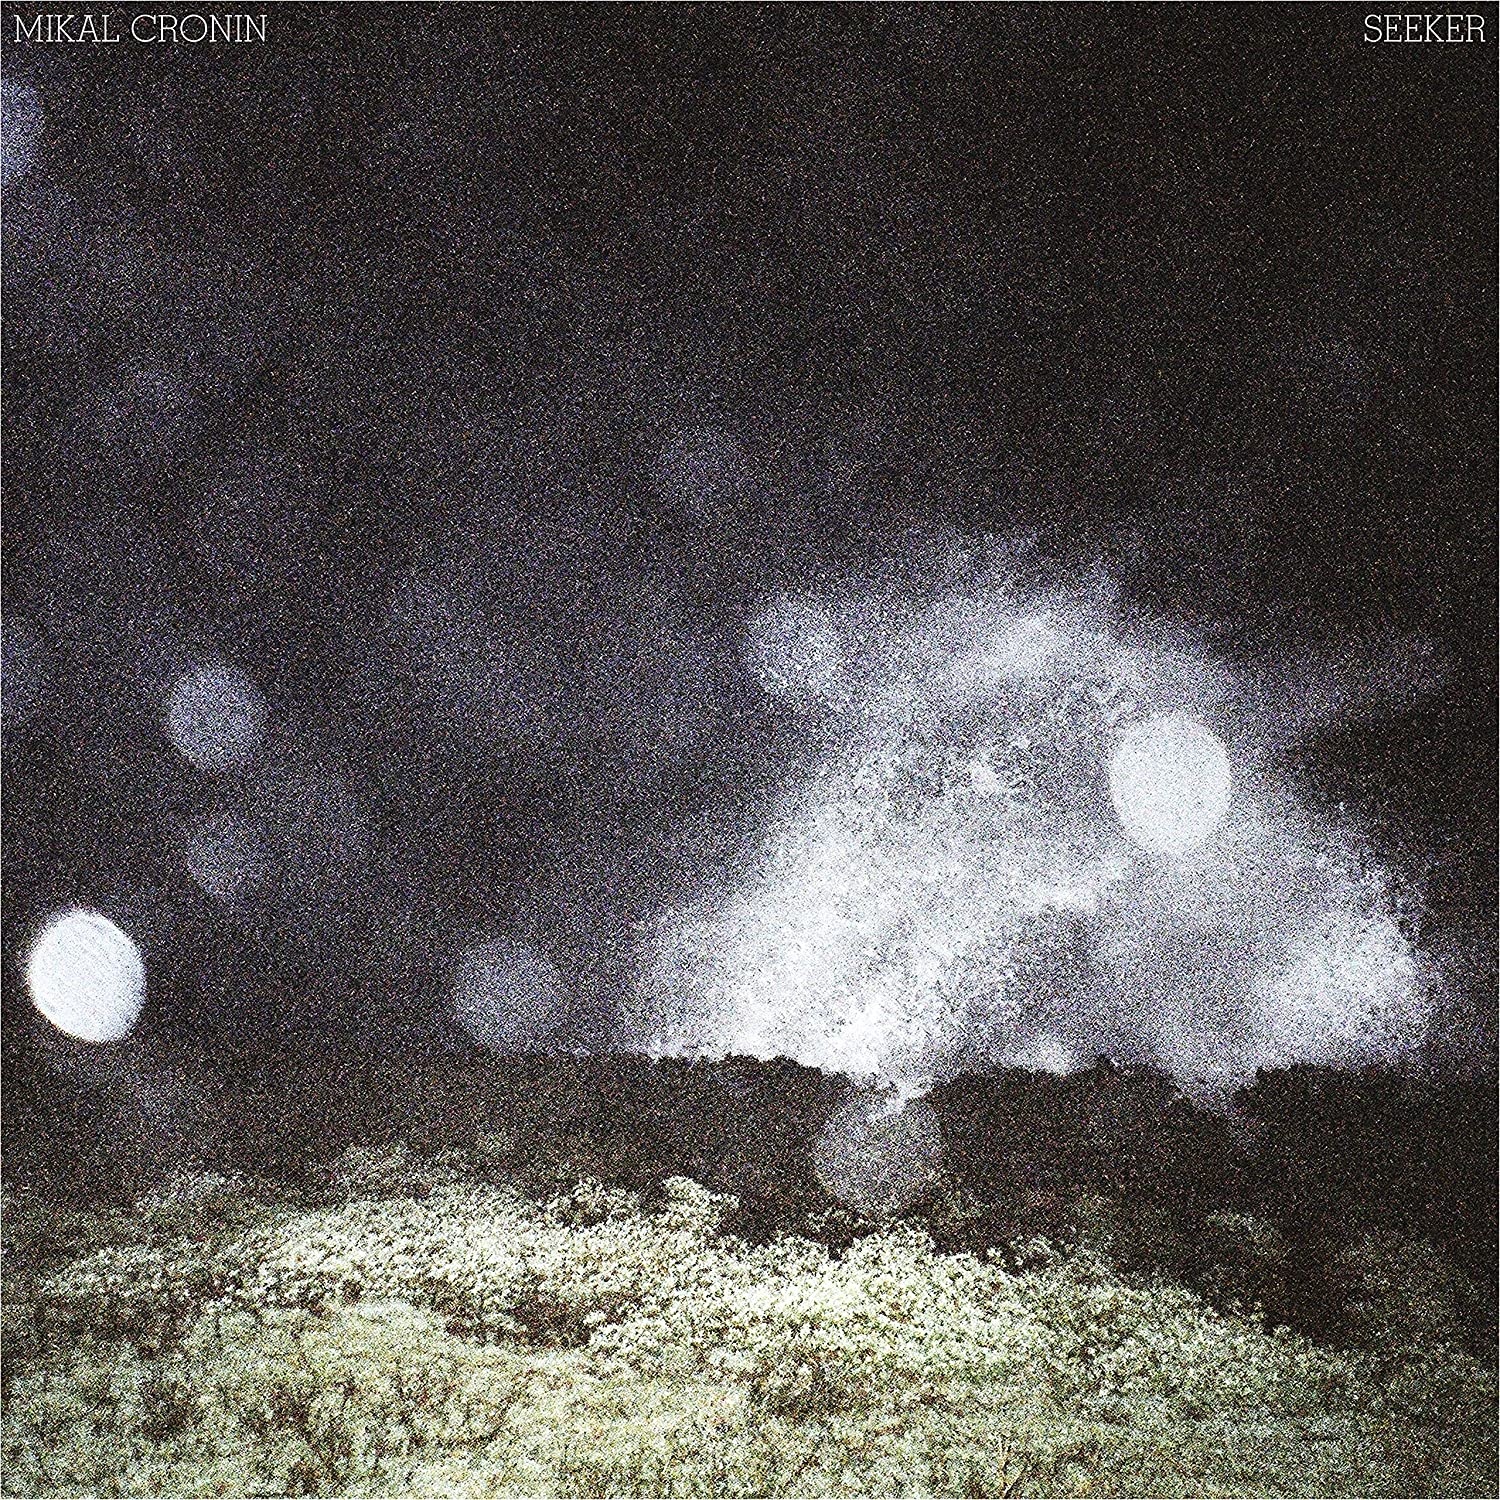 Mikal Cronin - Seeker vinyl cover